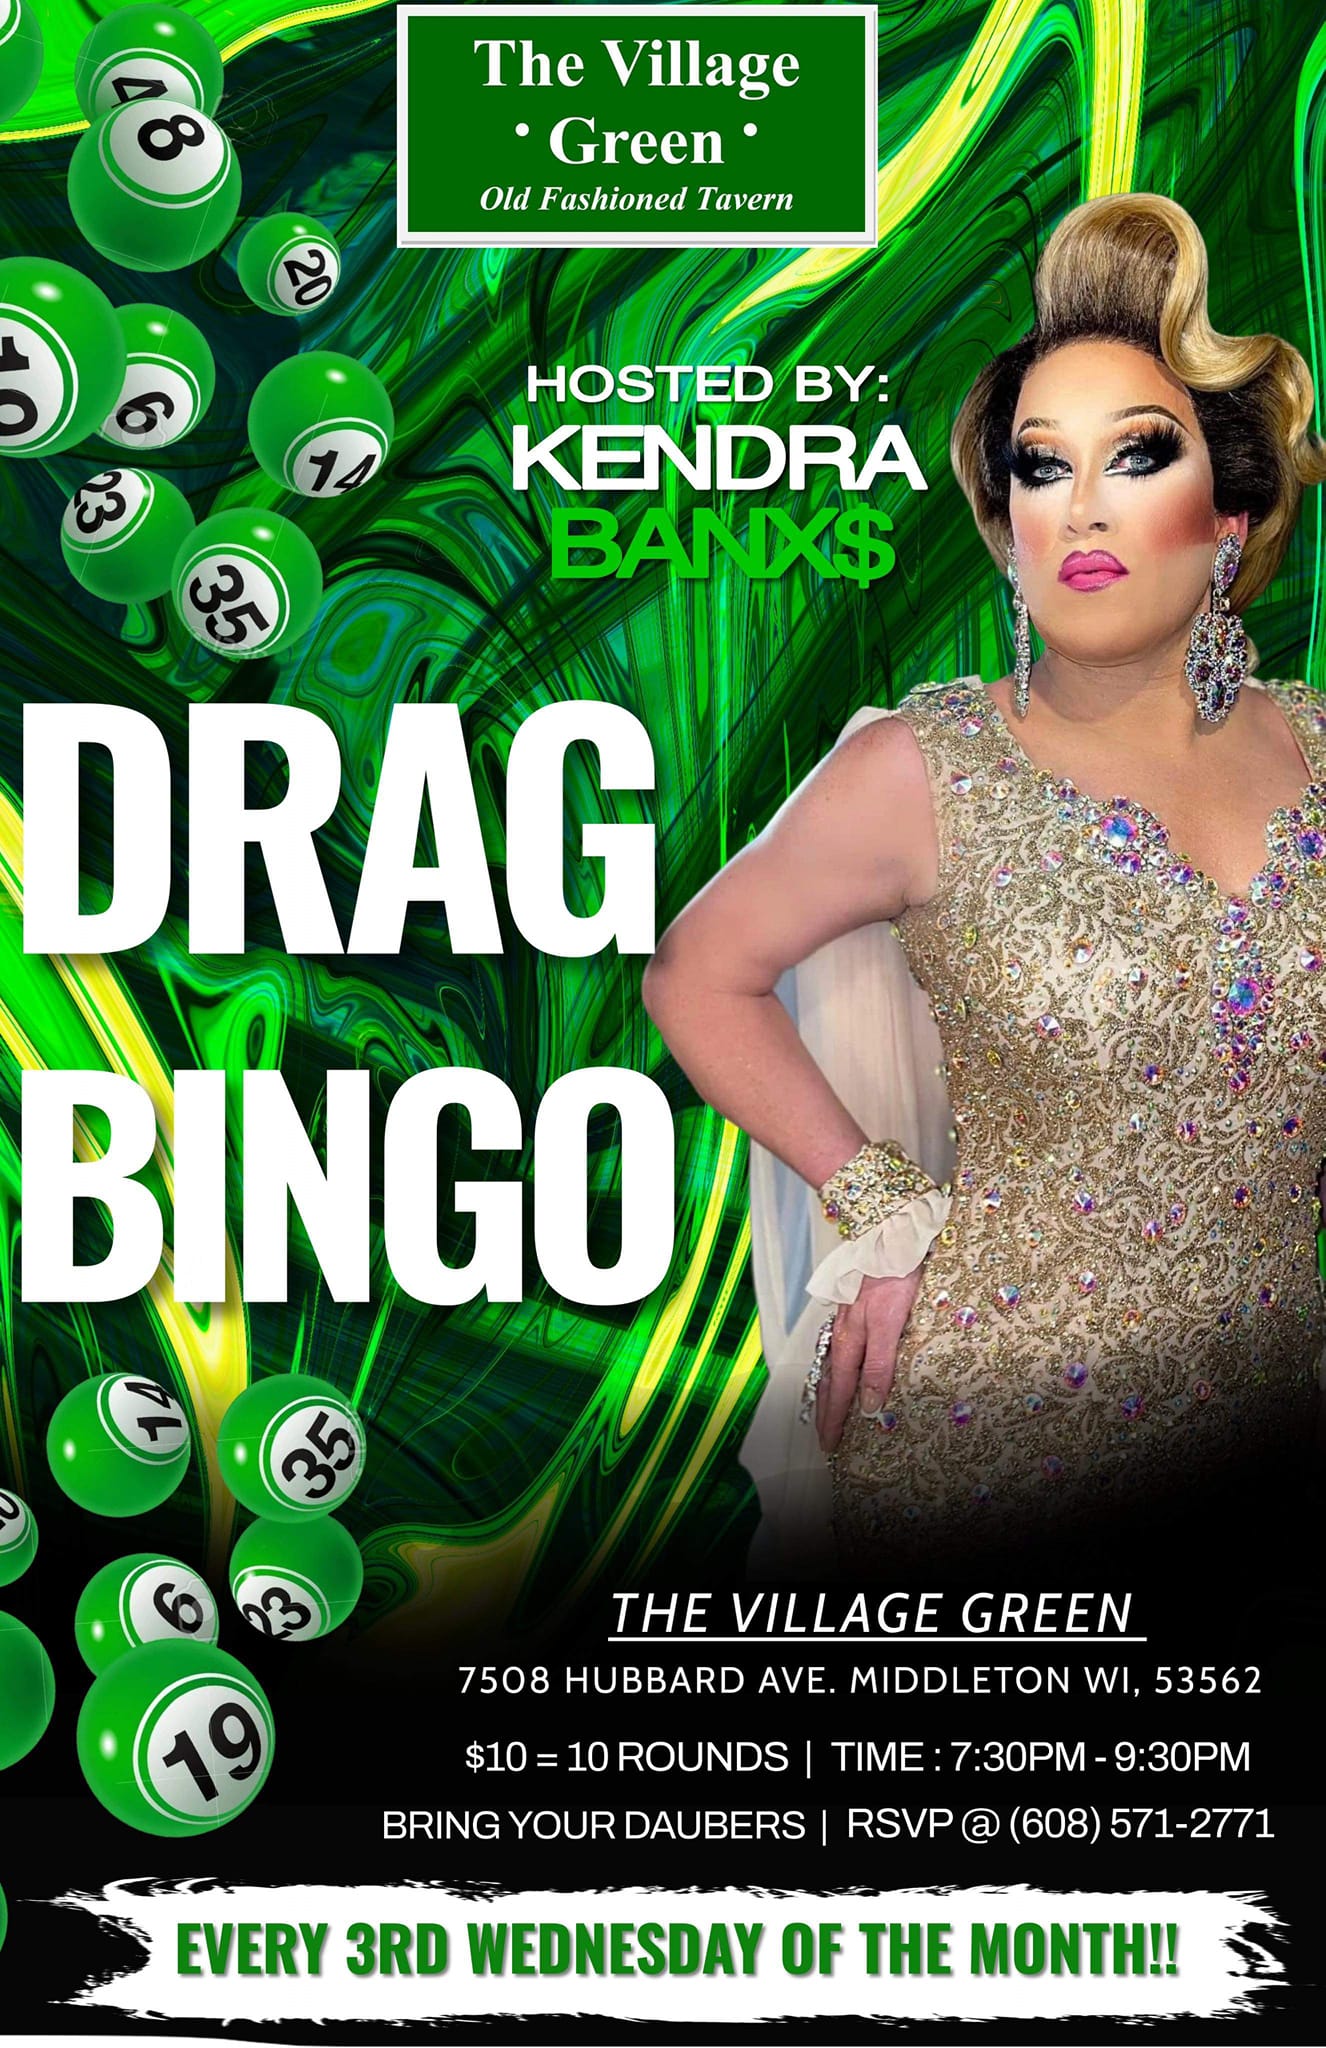 Drag bingo at the village green.